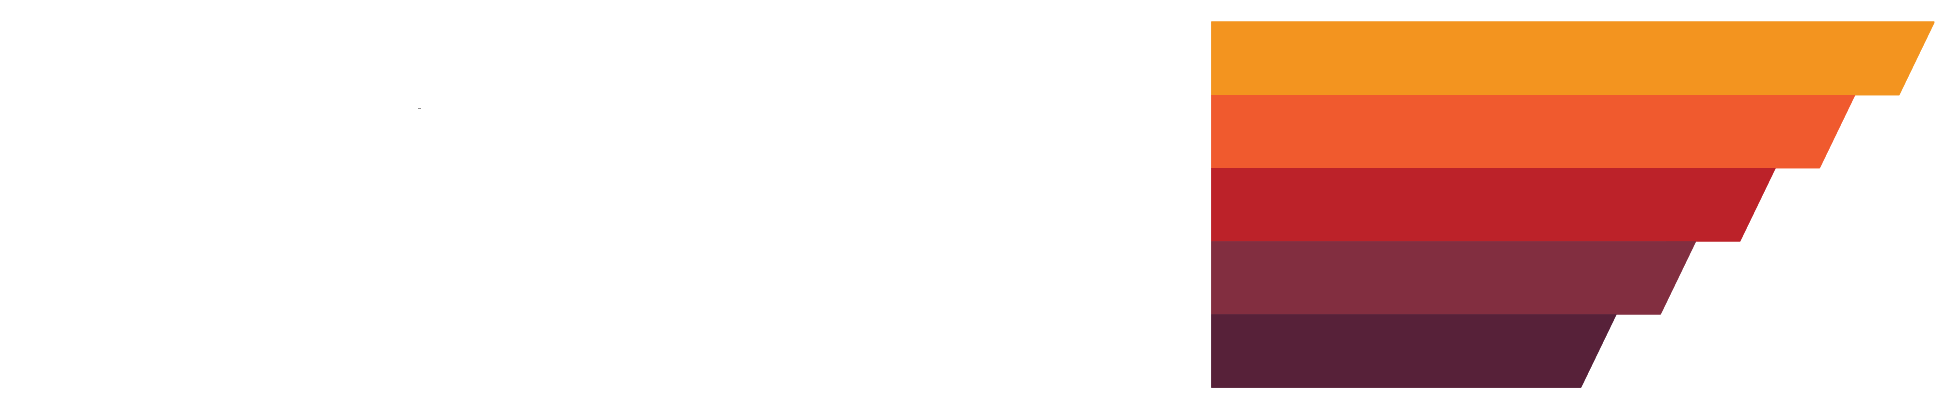 Crows Coffee Logo Reversed